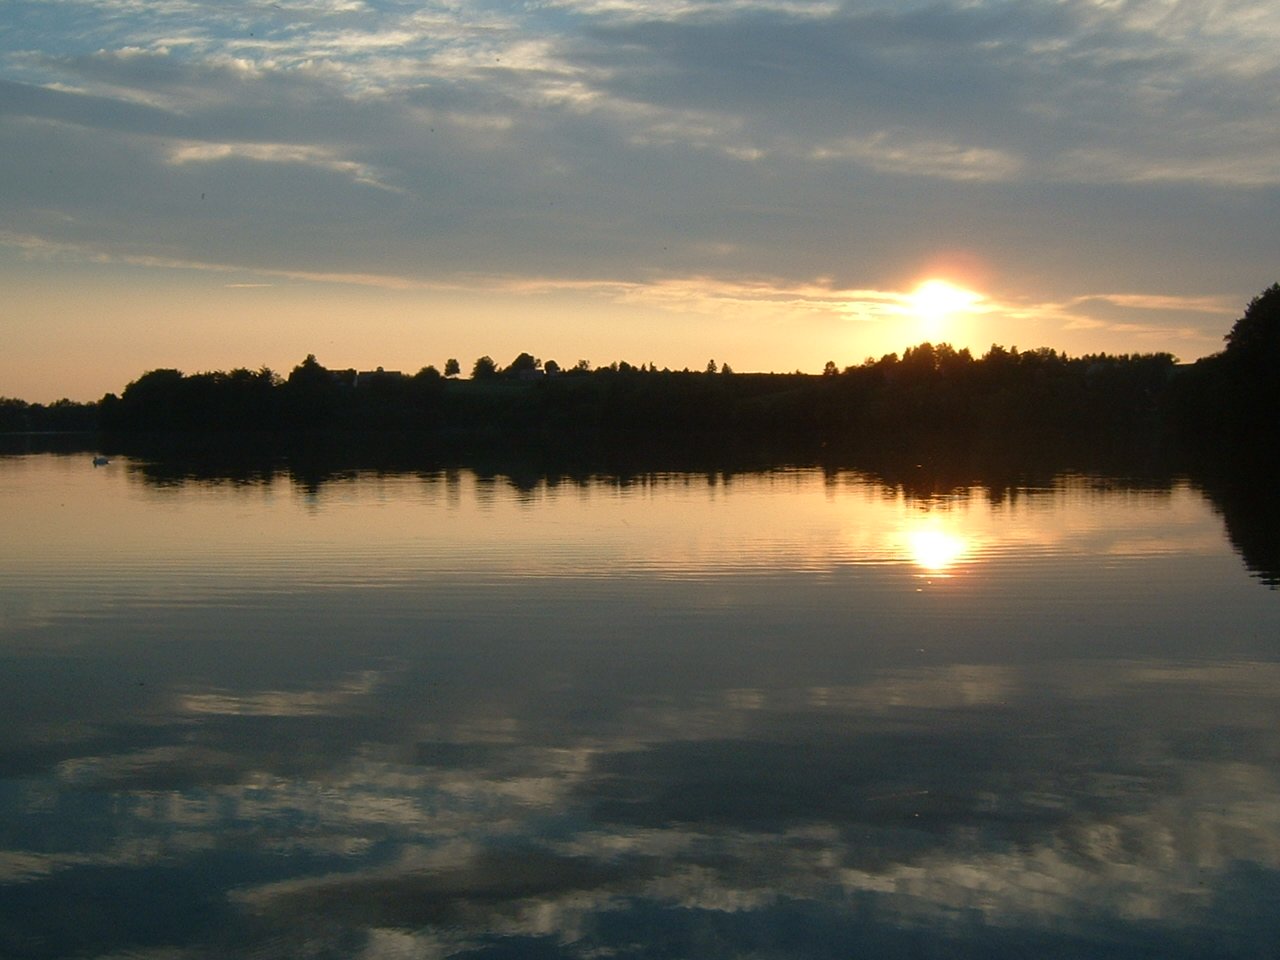 the sun is rising on a calm, still lake